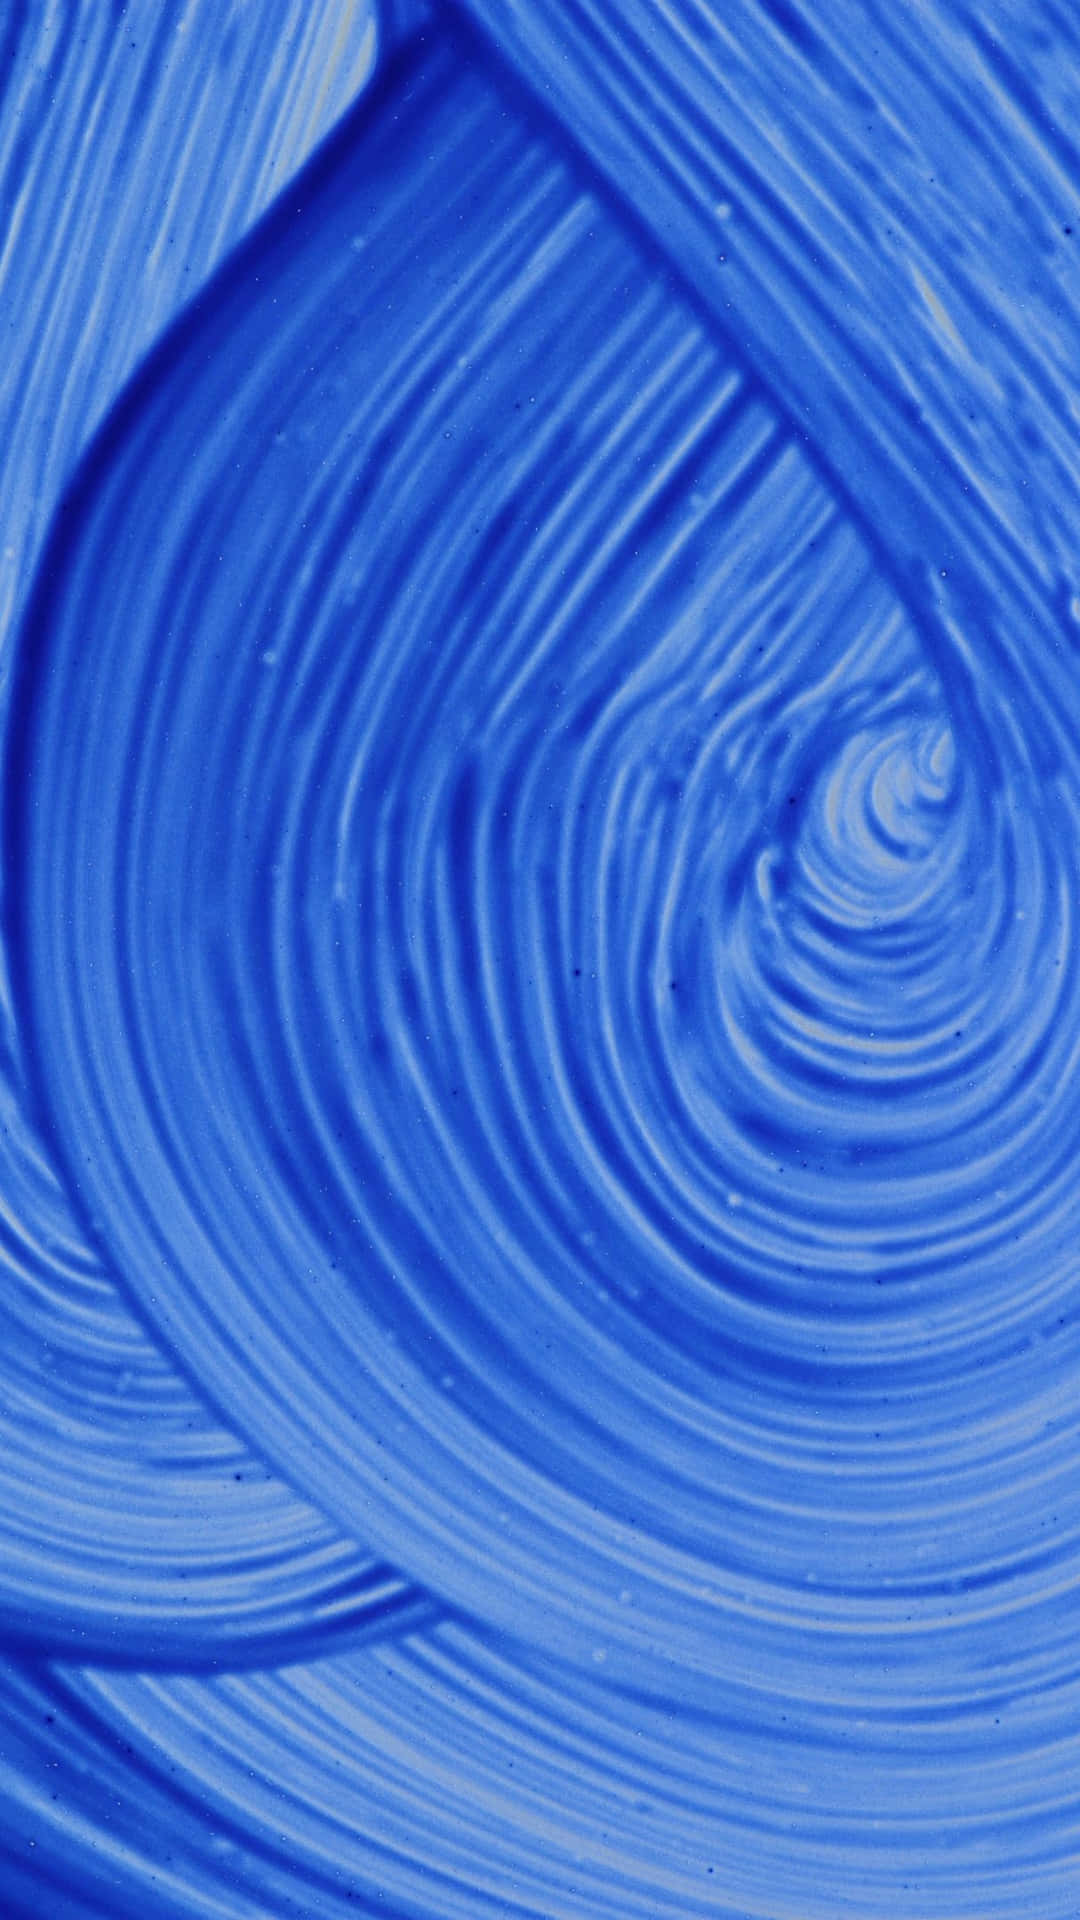 Amazing abstract blue swirl pattern background